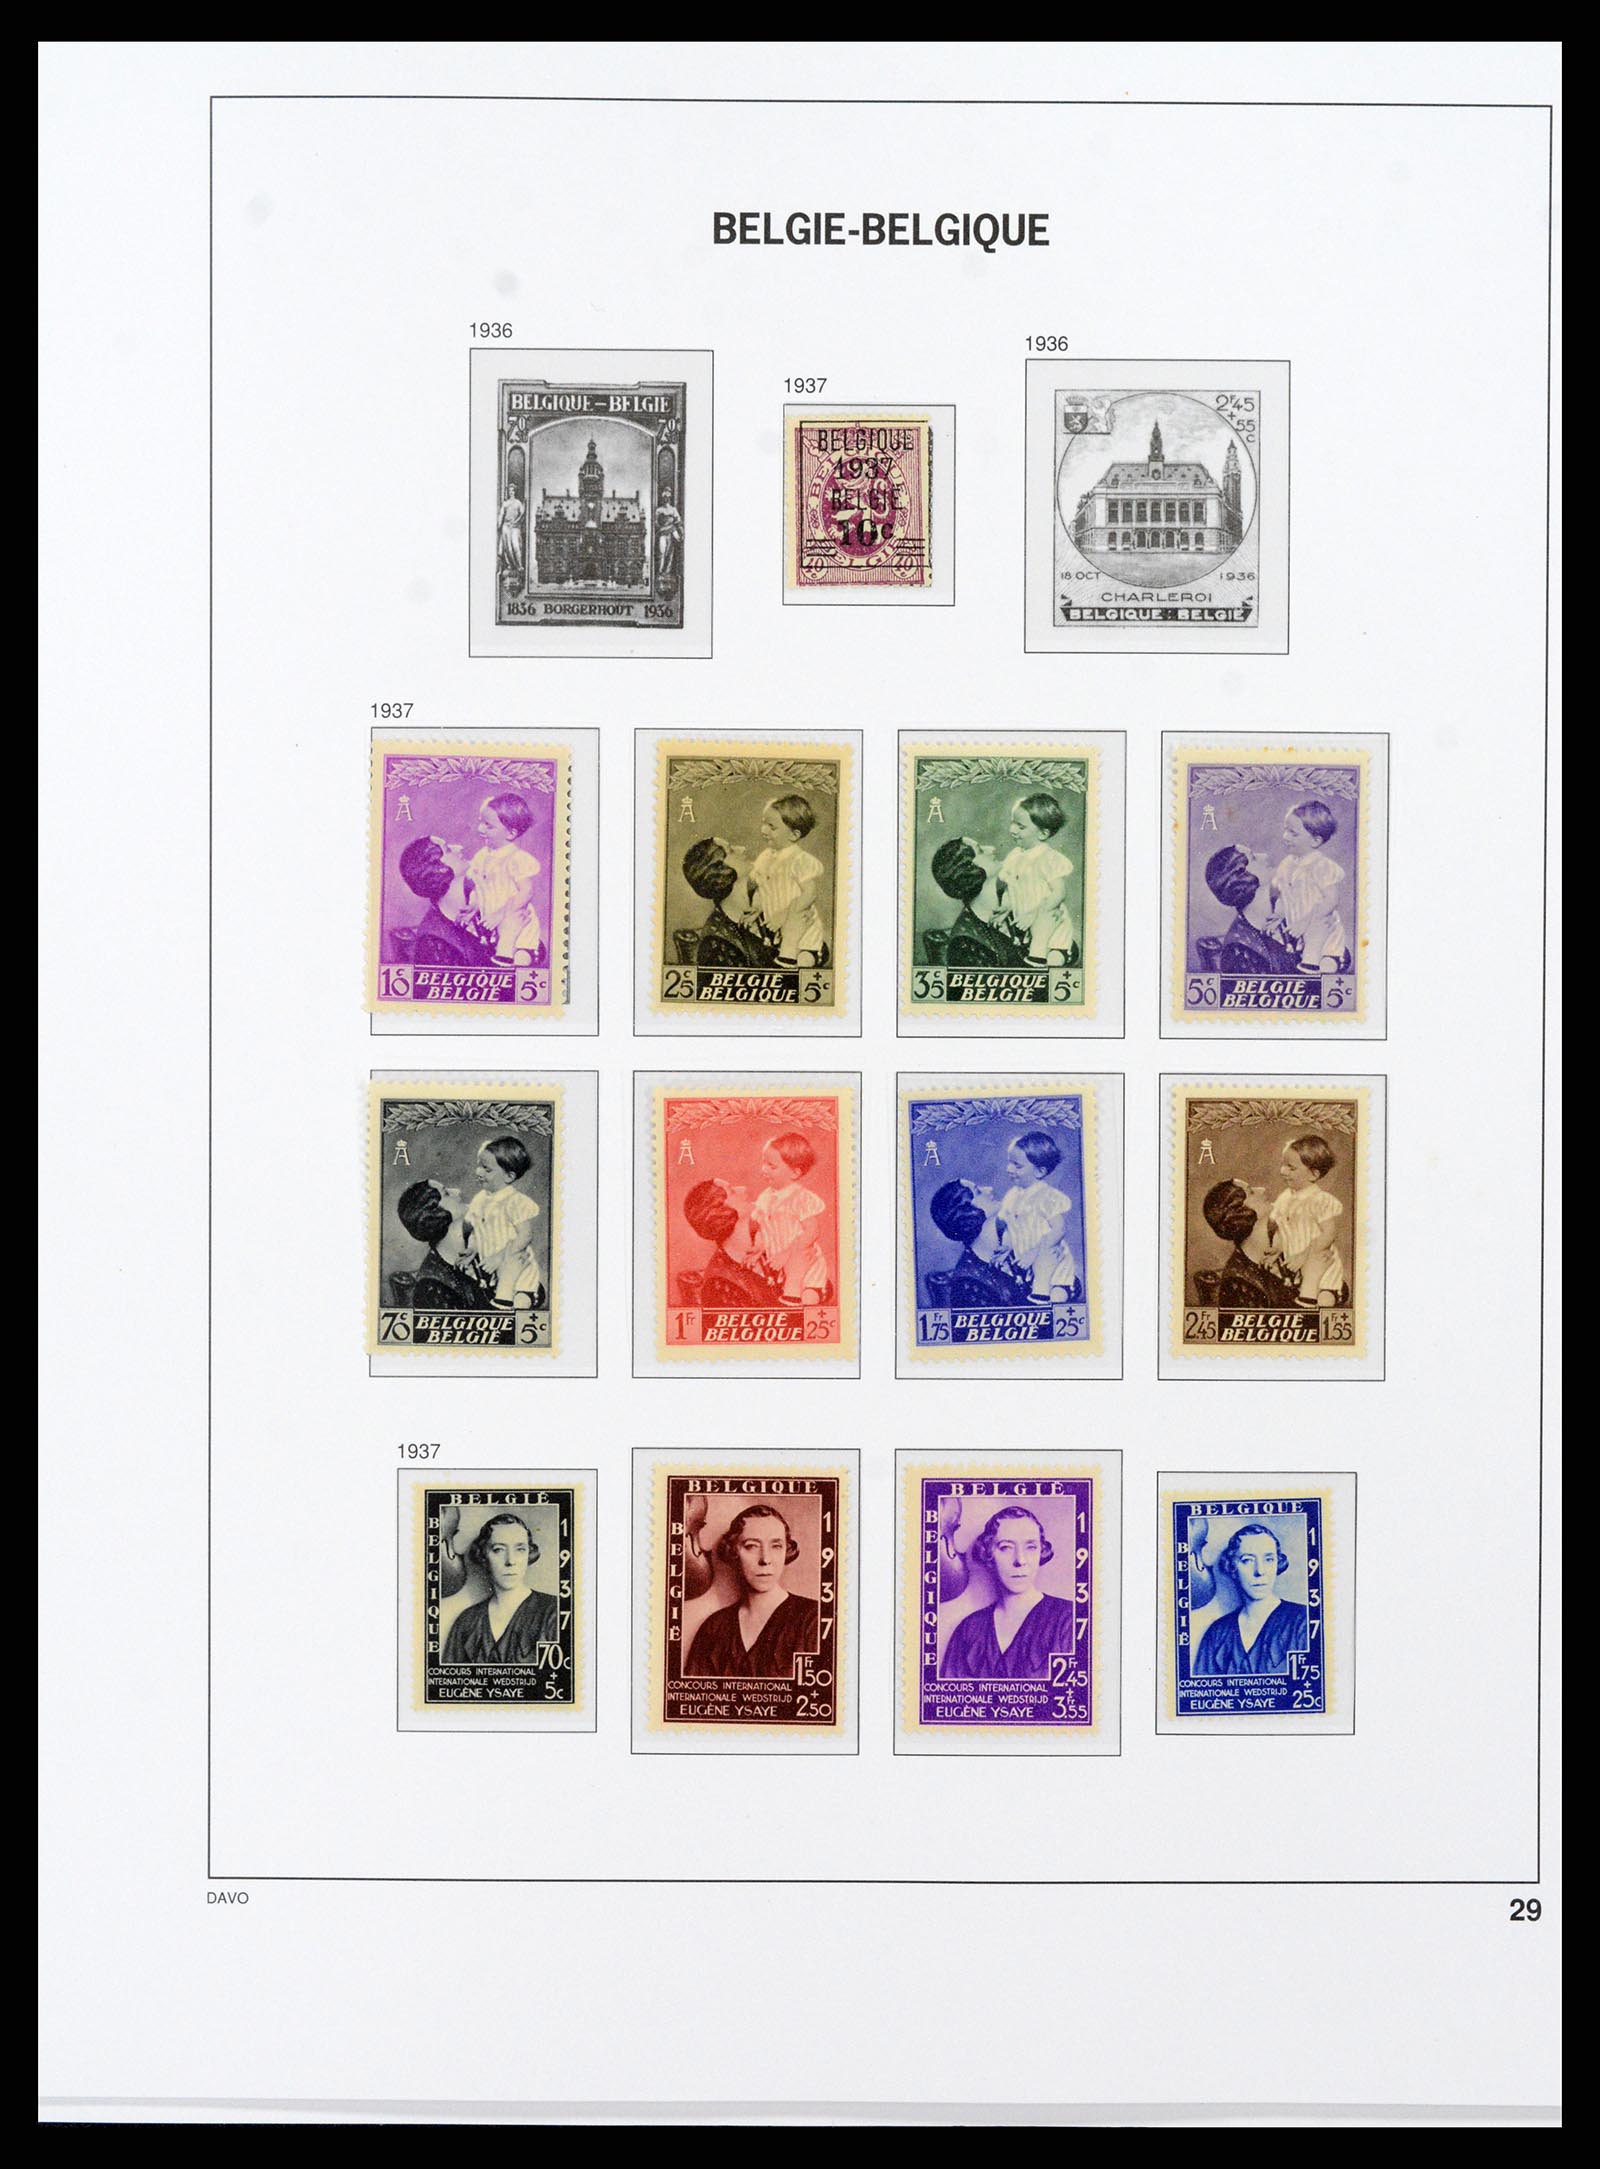 38073 024 - Stamp collection 38073 Belgium 1849-1950.